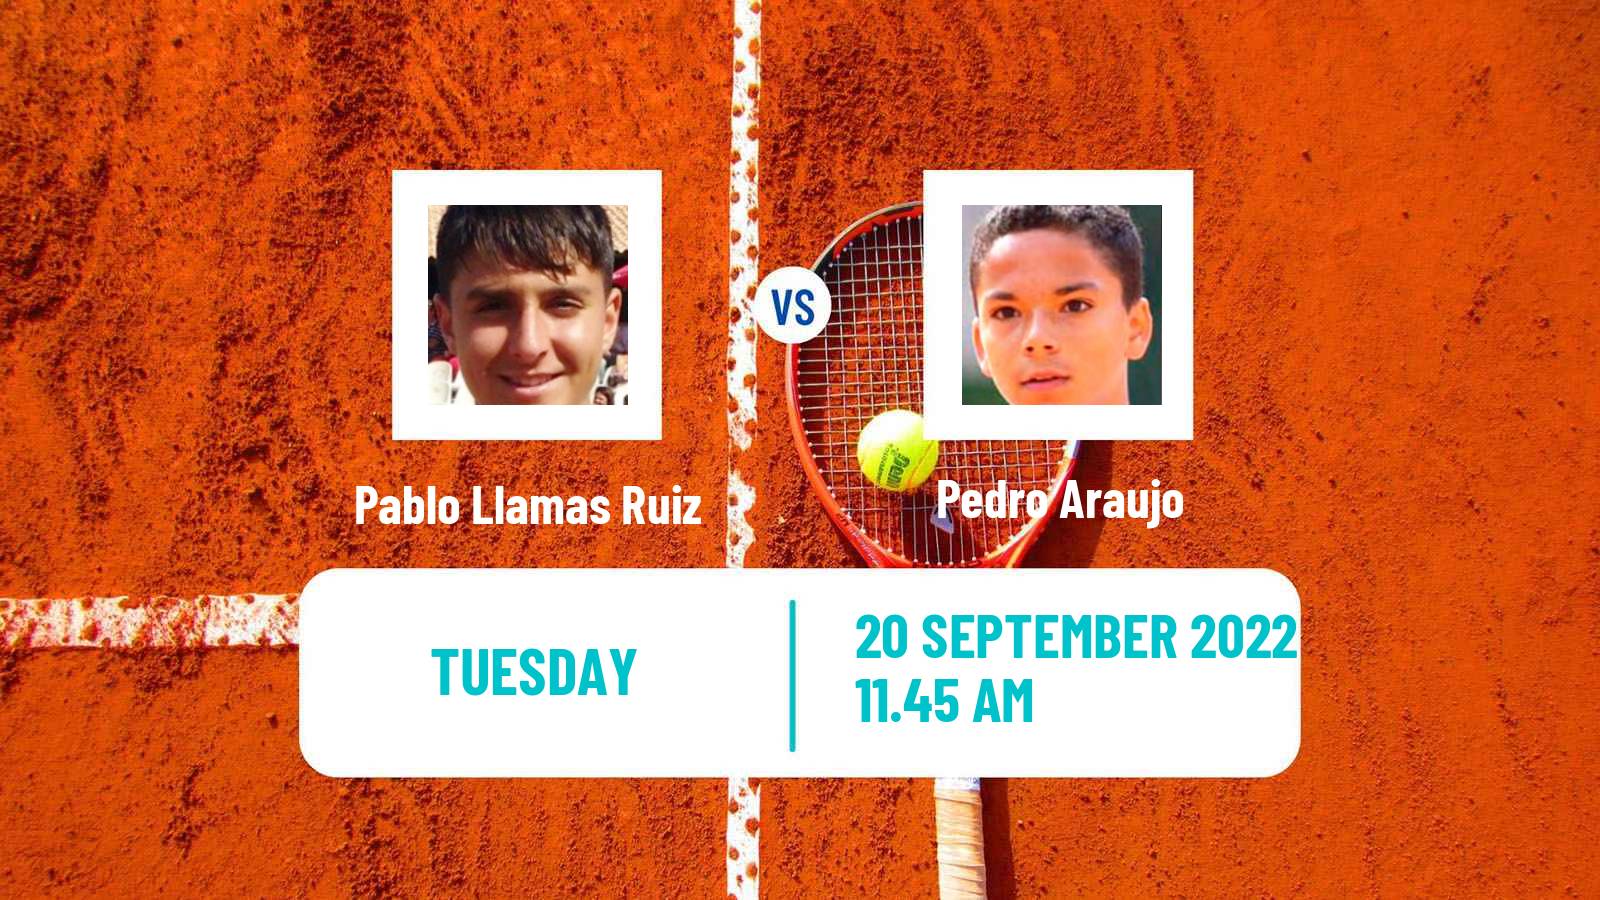 Tennis ATP Challenger Pablo Llamas Ruiz - Pedro Araujo